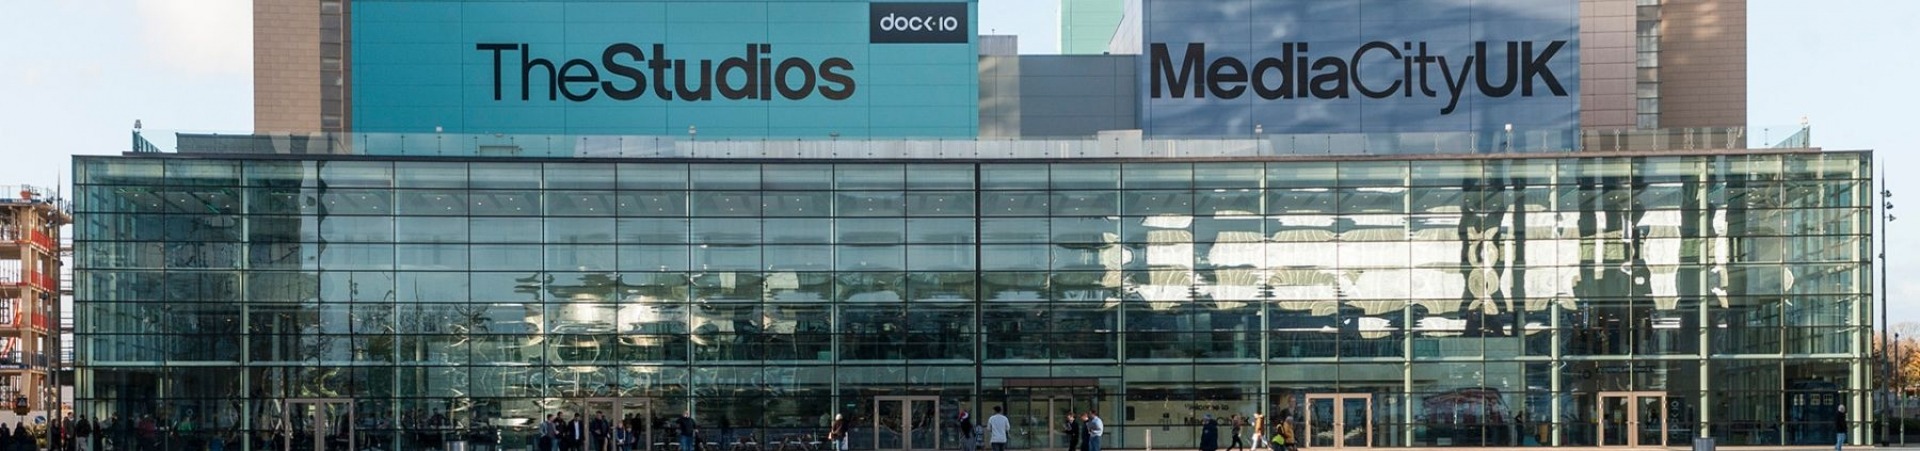 Tamlite Dock 10 Studios Salford Retail and Leisure Case Study header